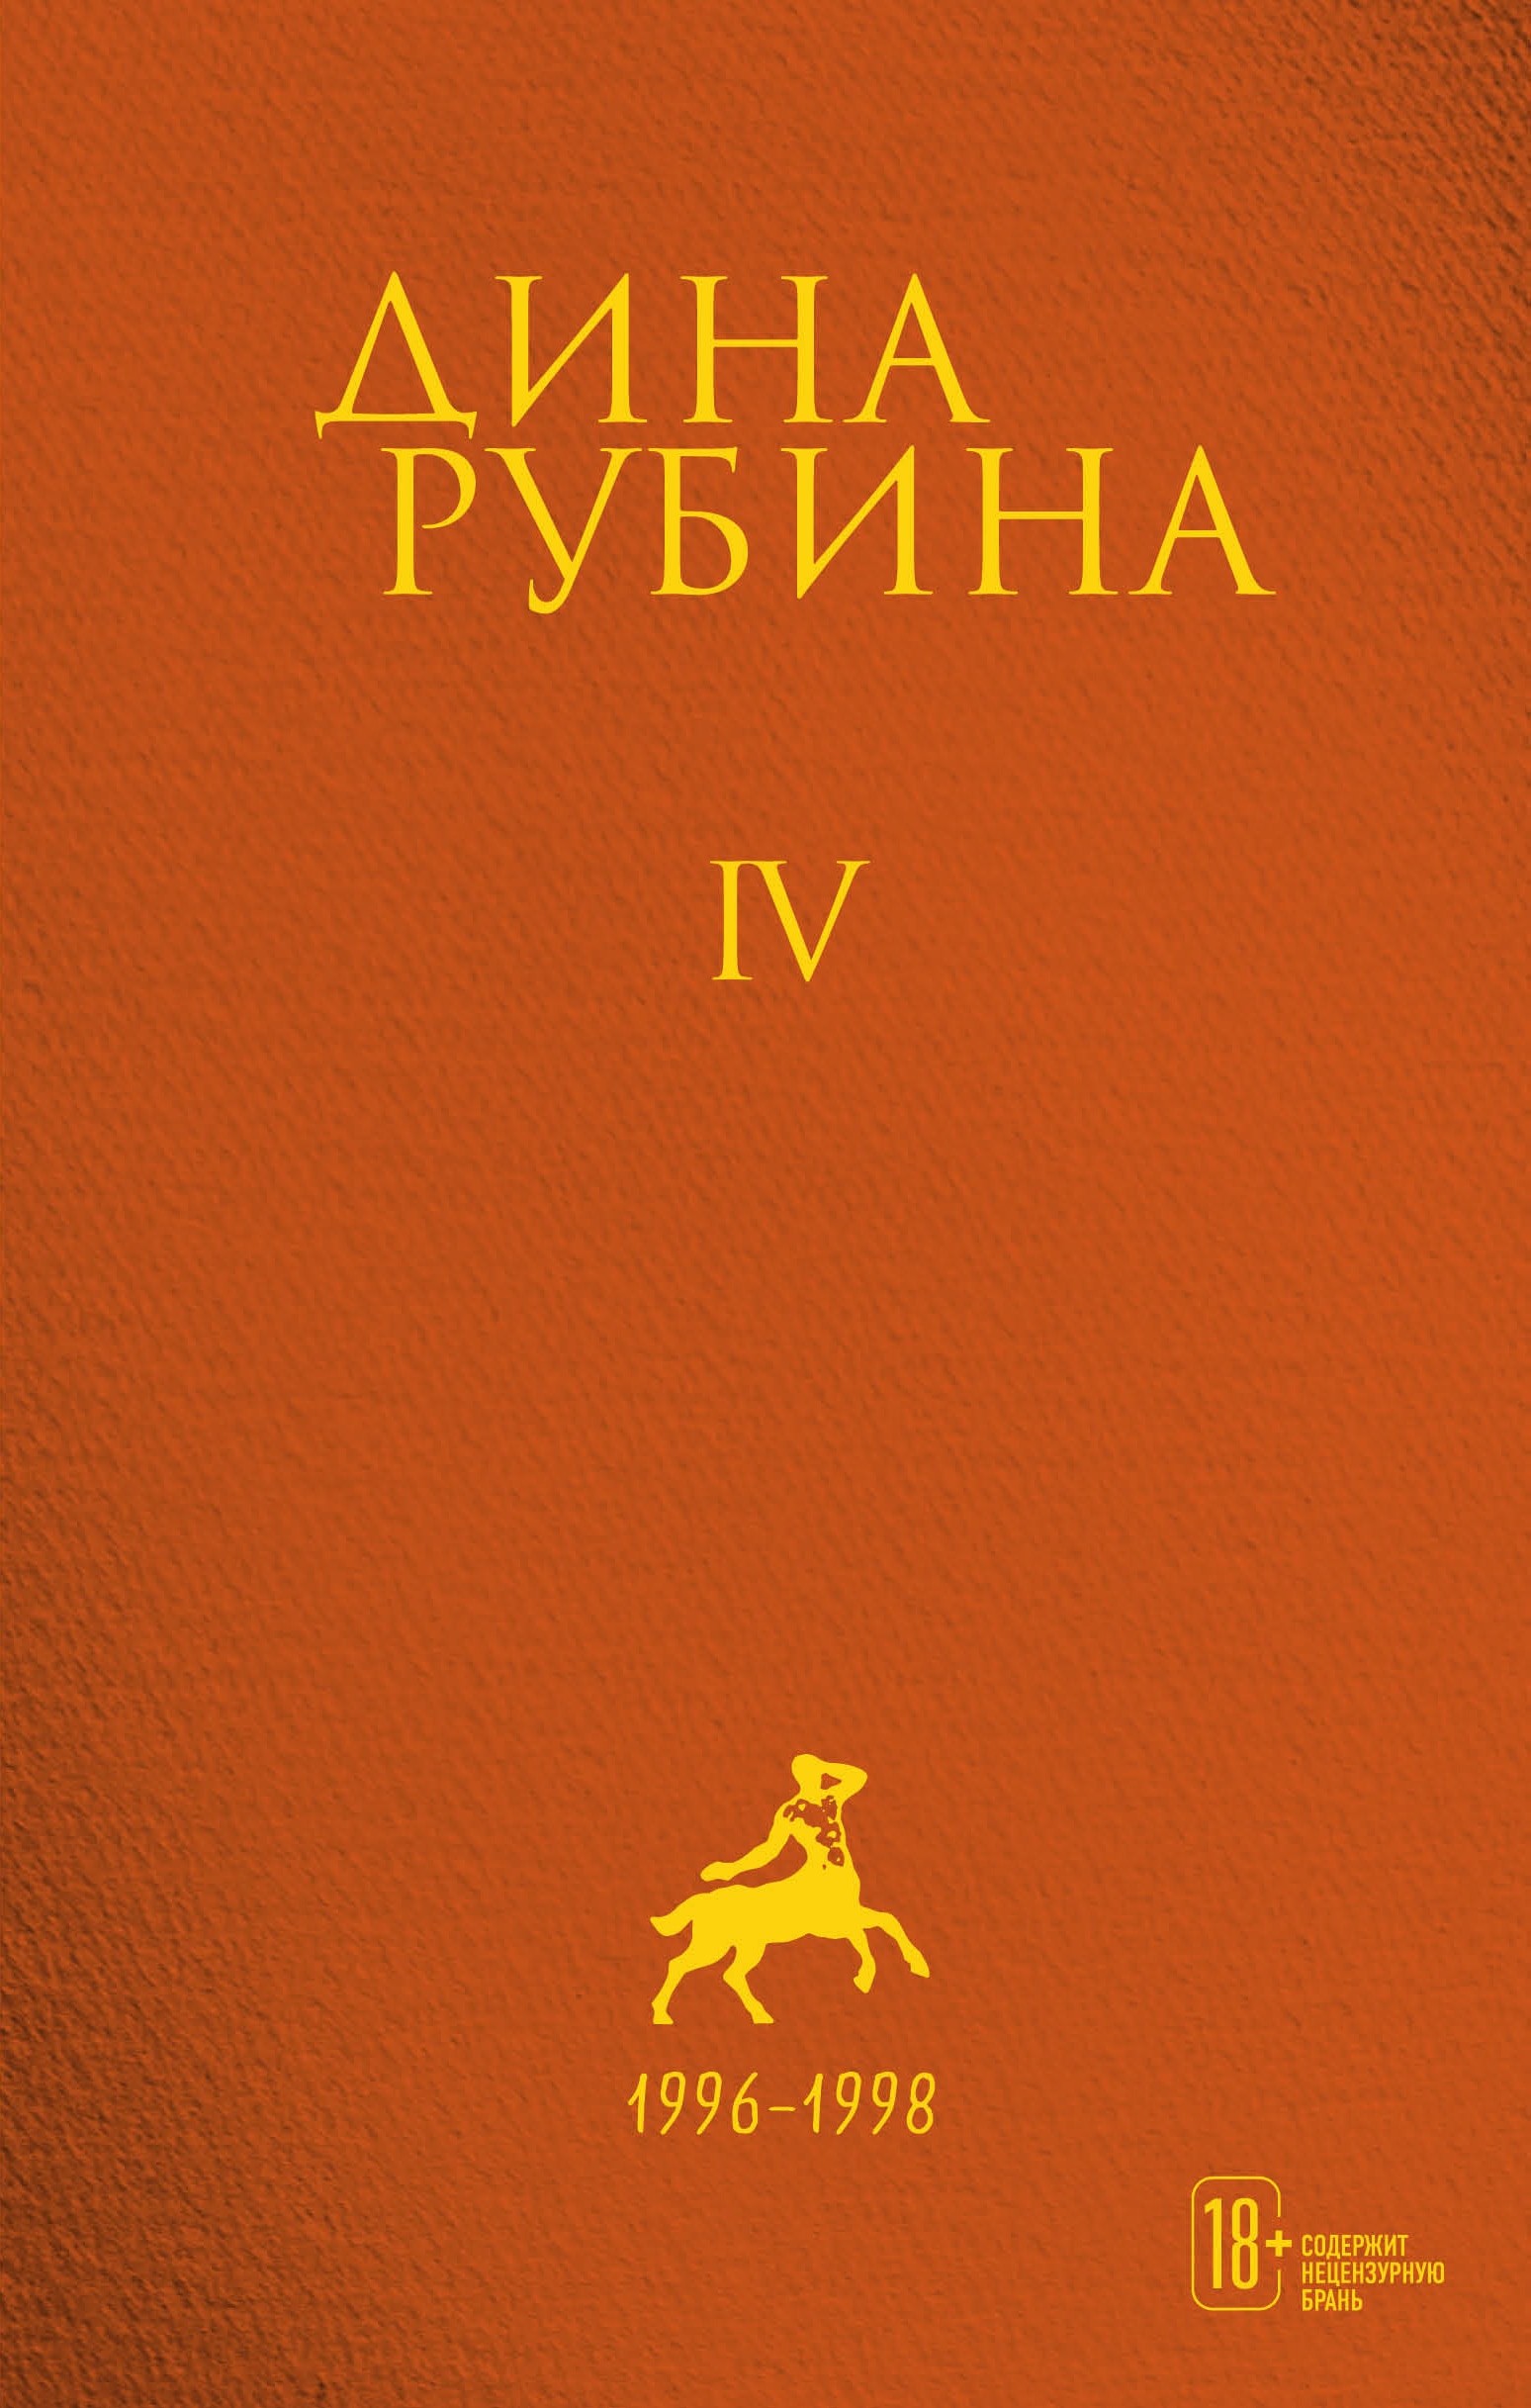 Book “Том 4” by Дина Рубина — July 7, 2021